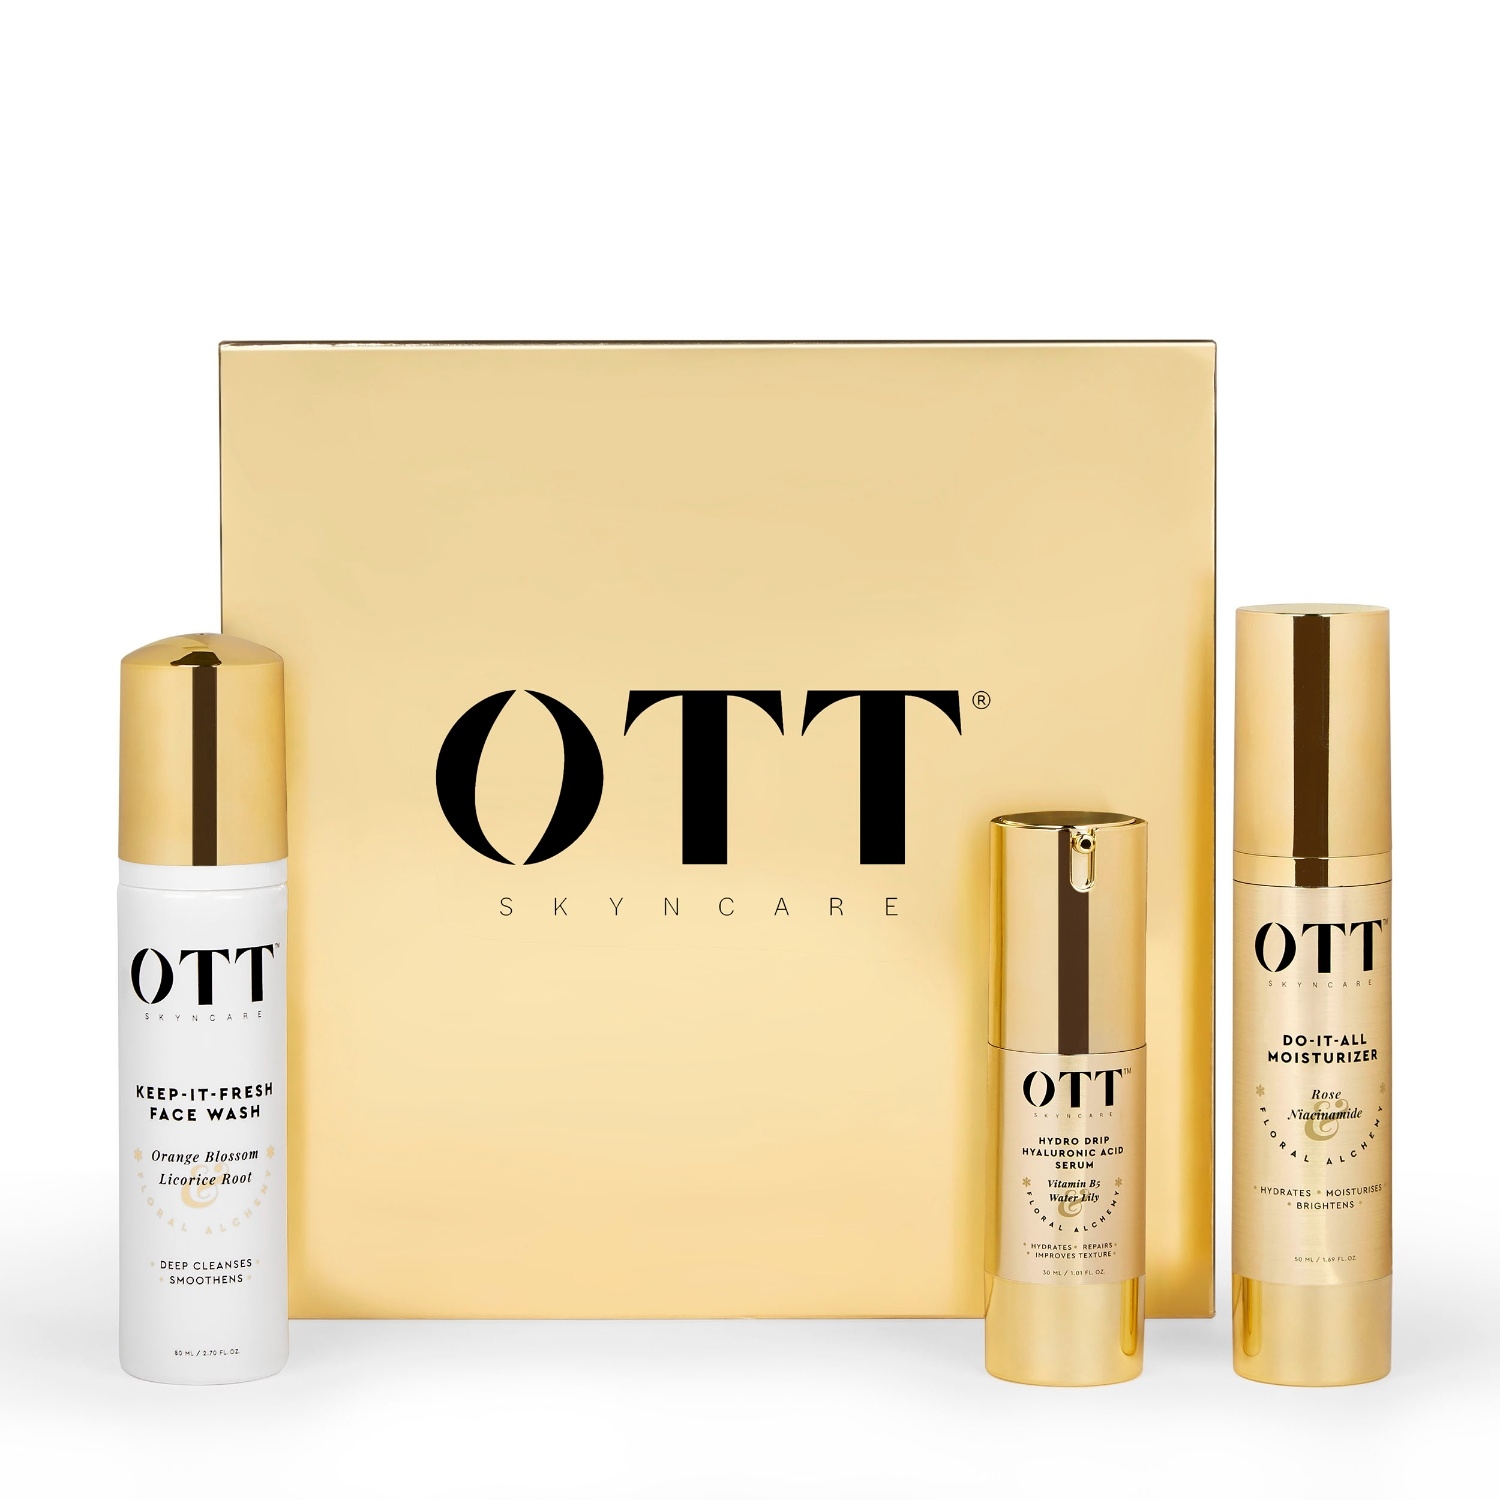 OTT SKYNCARE Hydration Station Facewash Gift Kit (3Pcs)